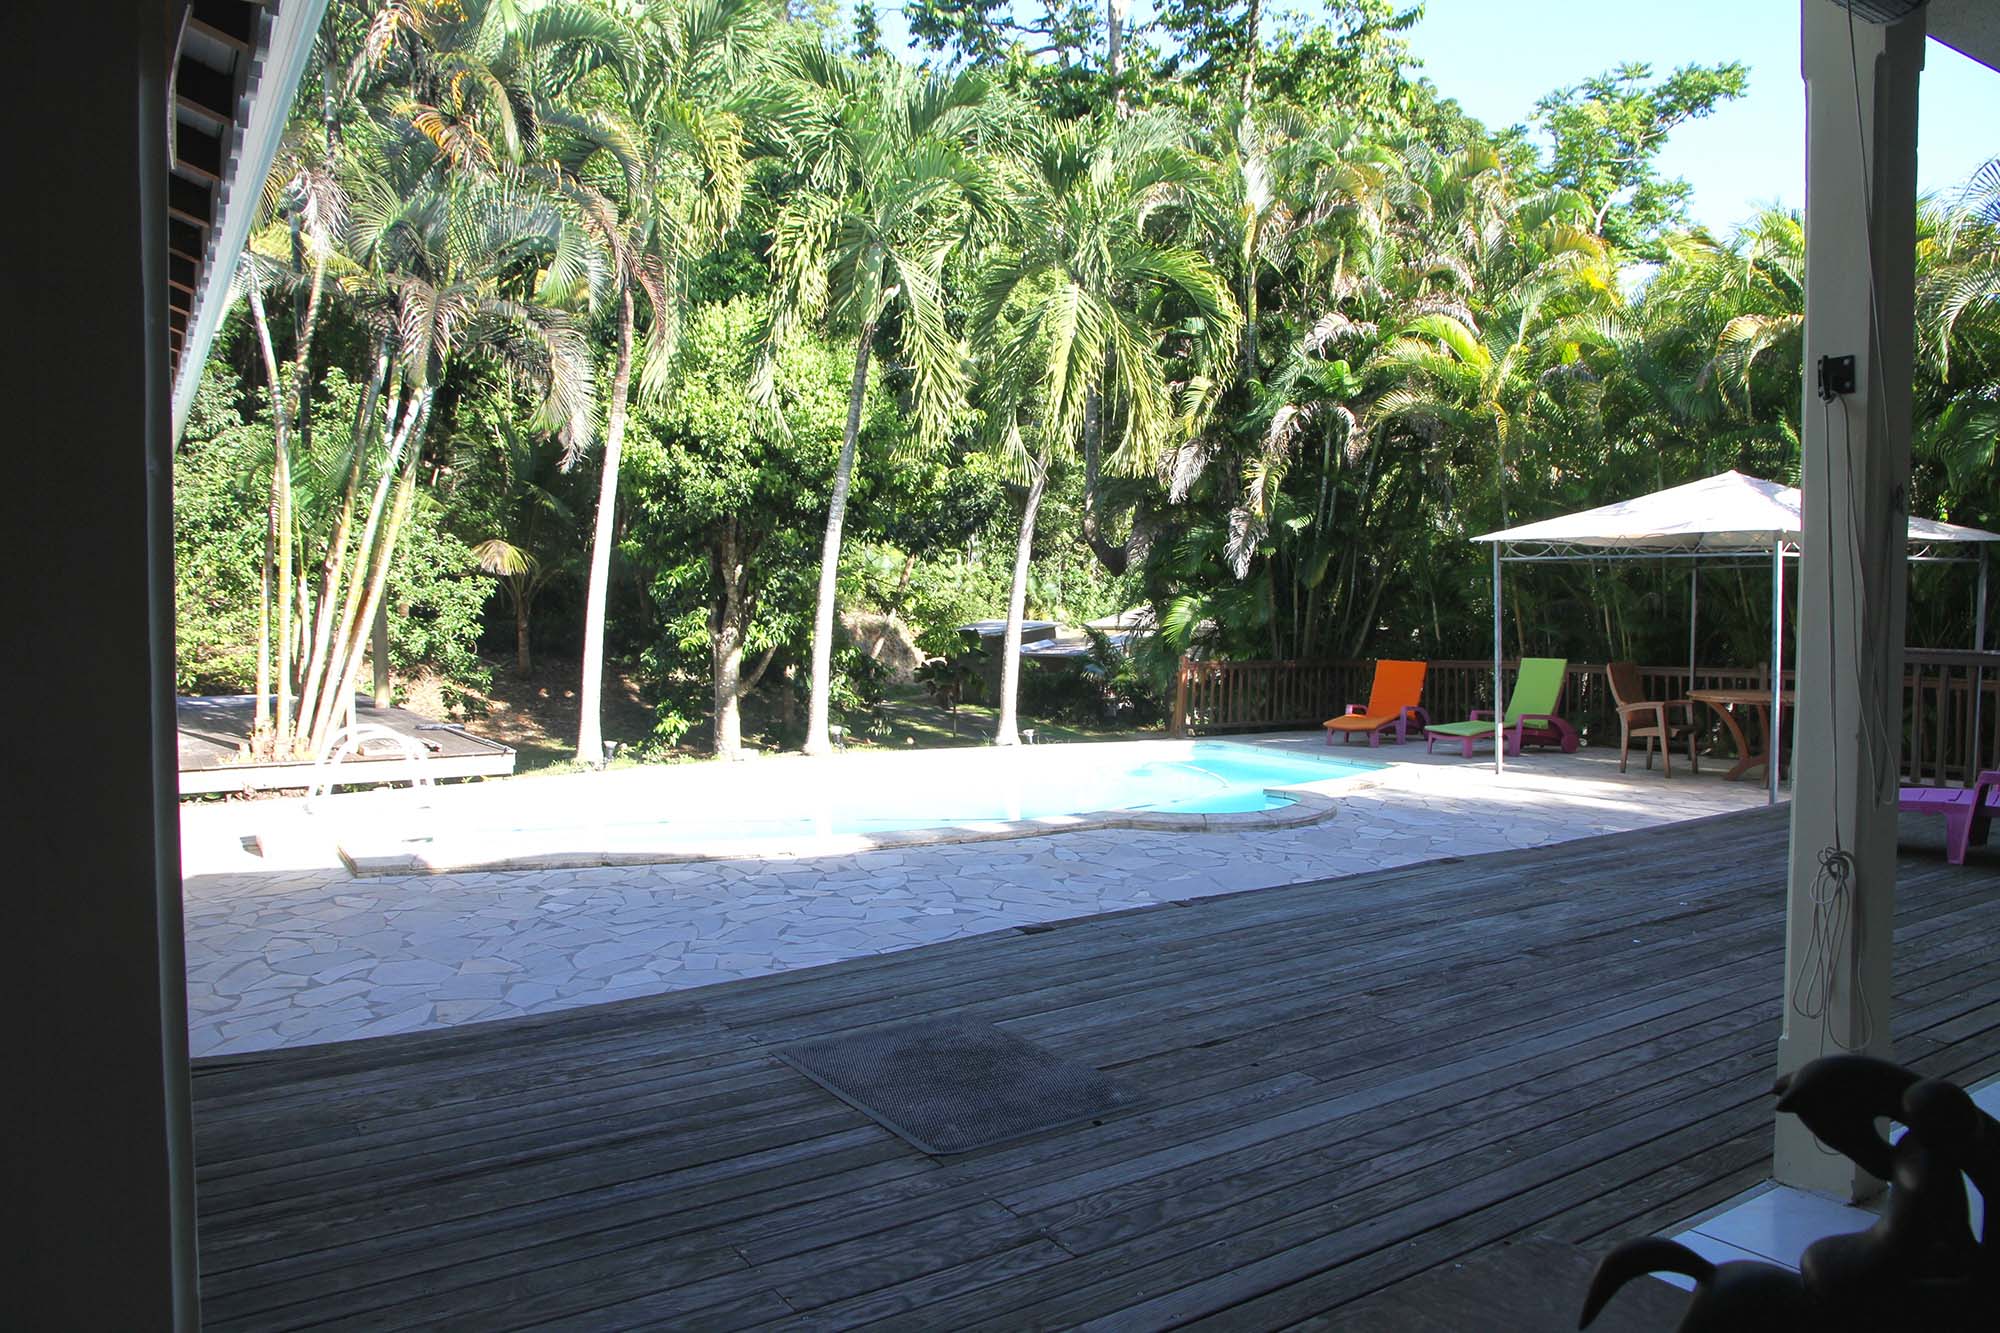 hebergement_location de bungalow avec piscine_image_20